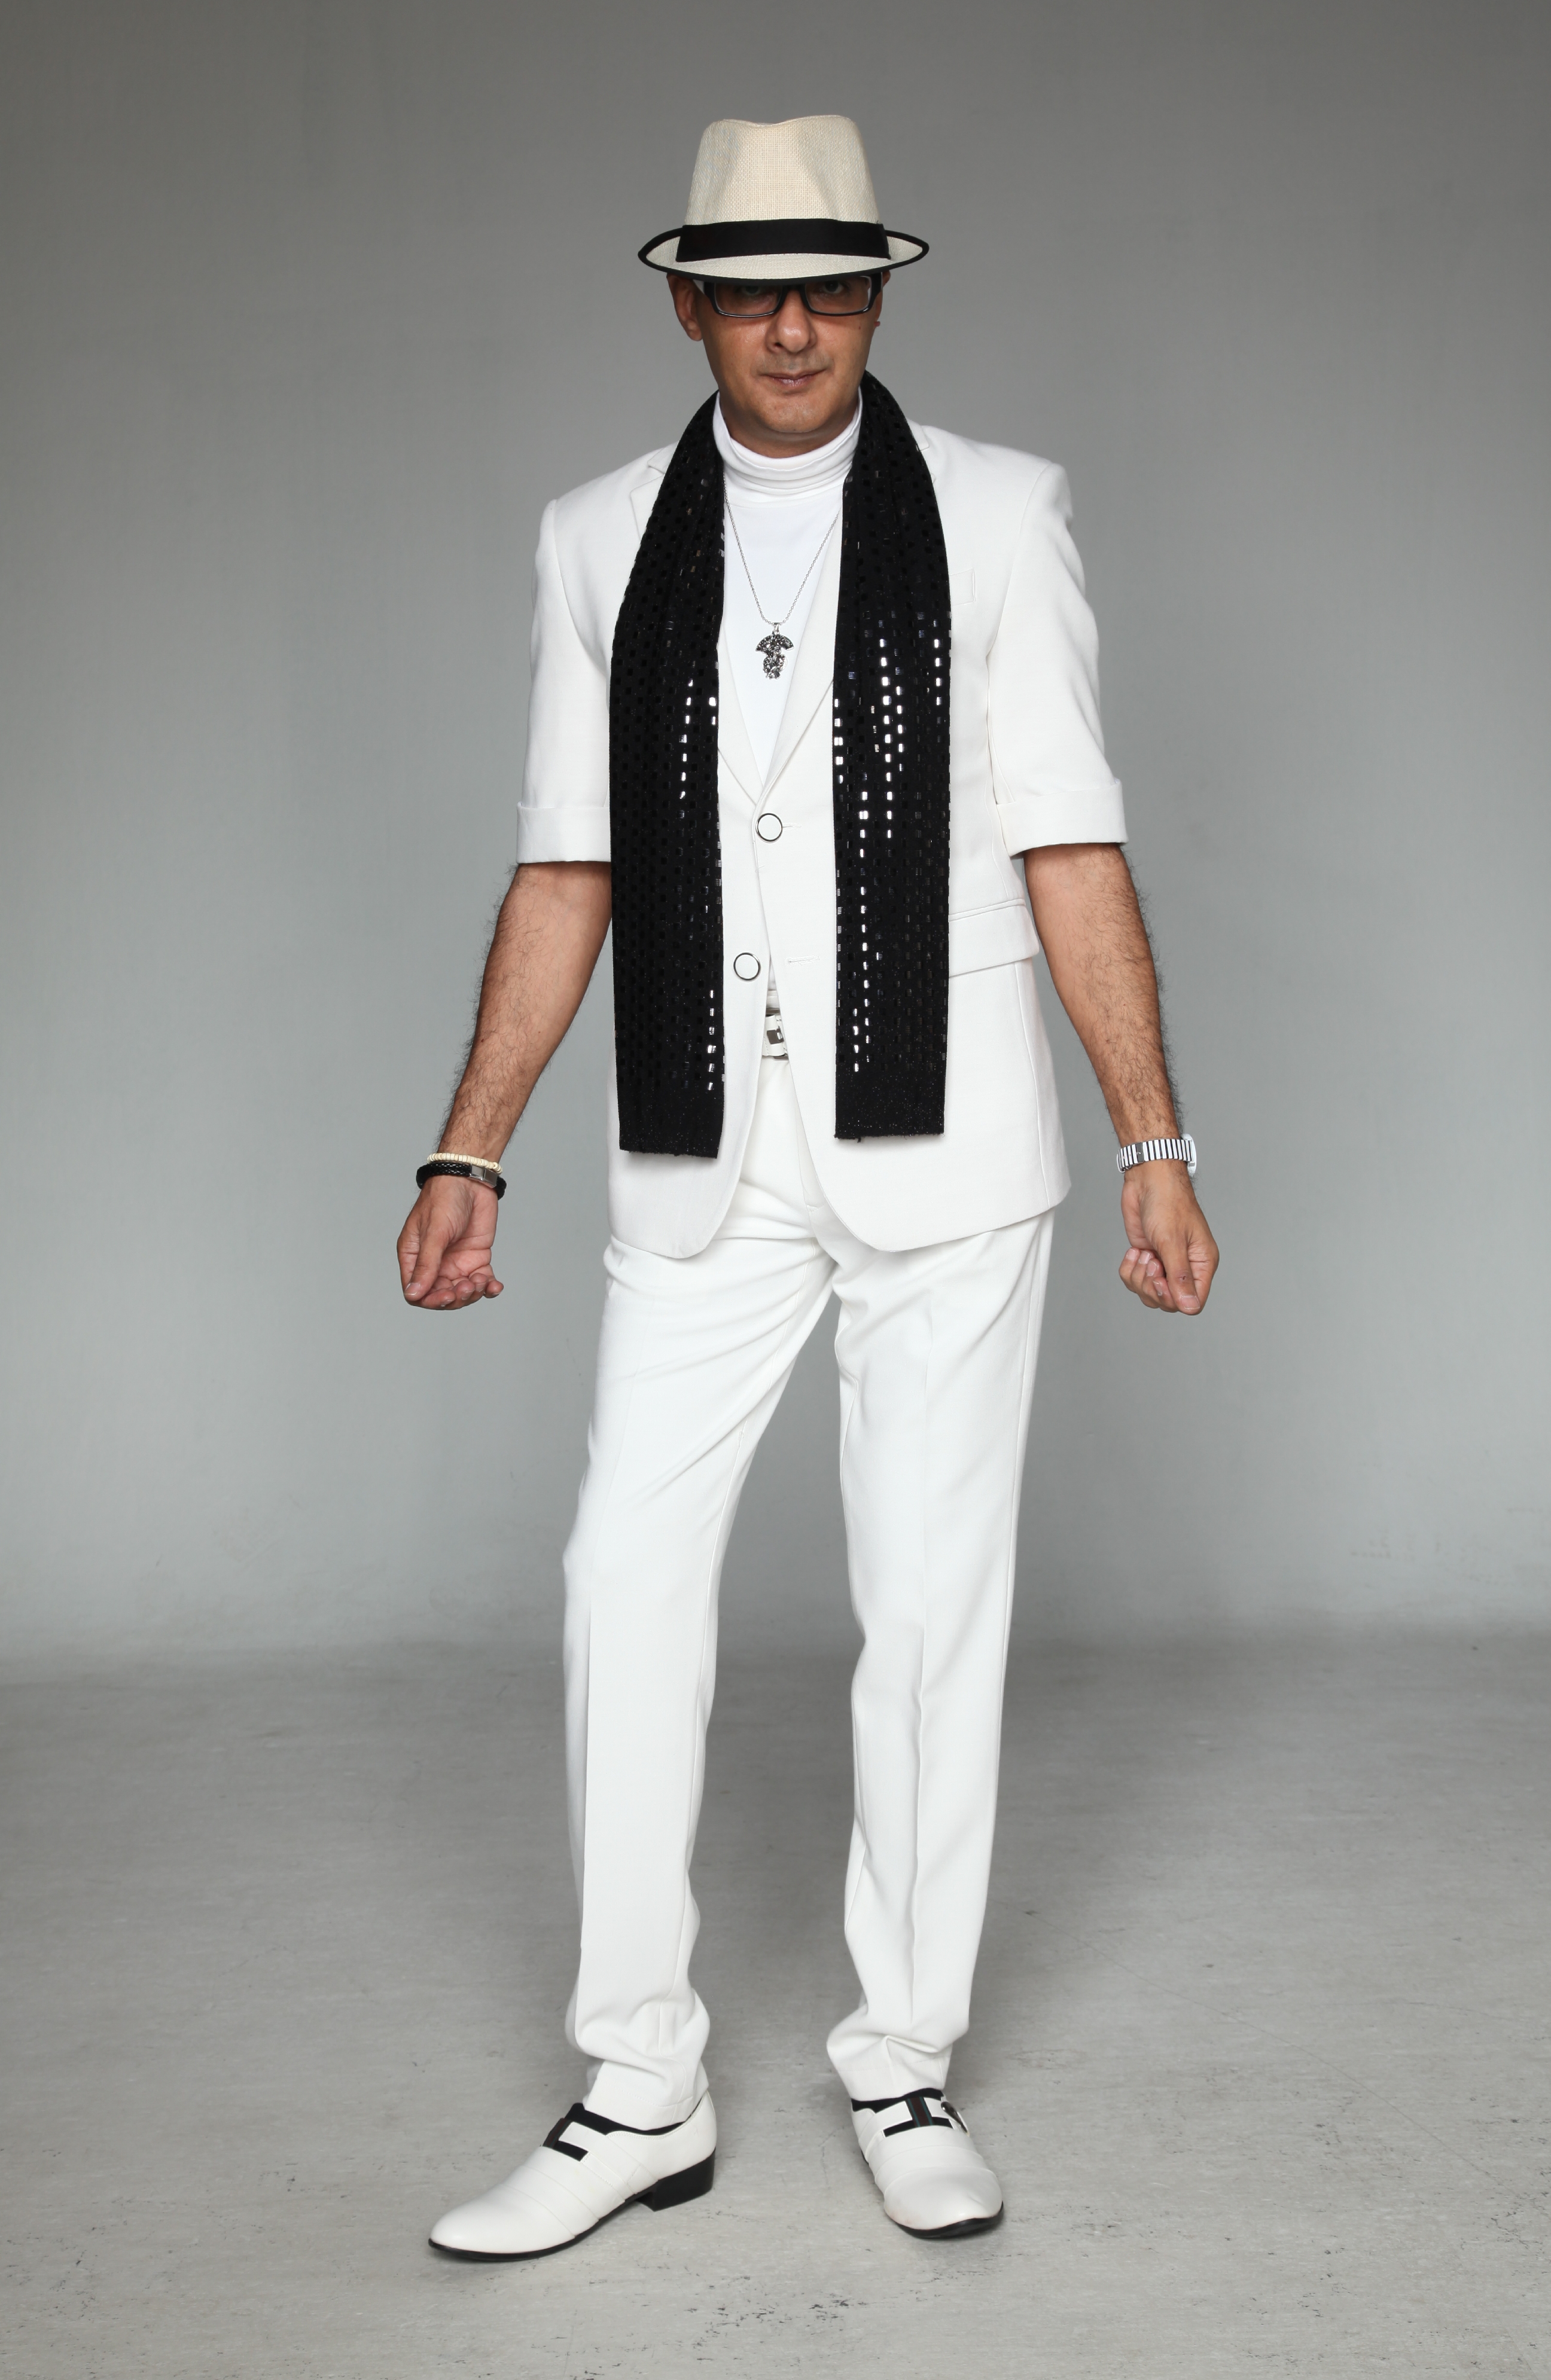 Suit Rental Suits Rent Hire Designer My Singapore Tailor Tailors Rentals Shop Tuxedo Black Tie Wedding Formal 24